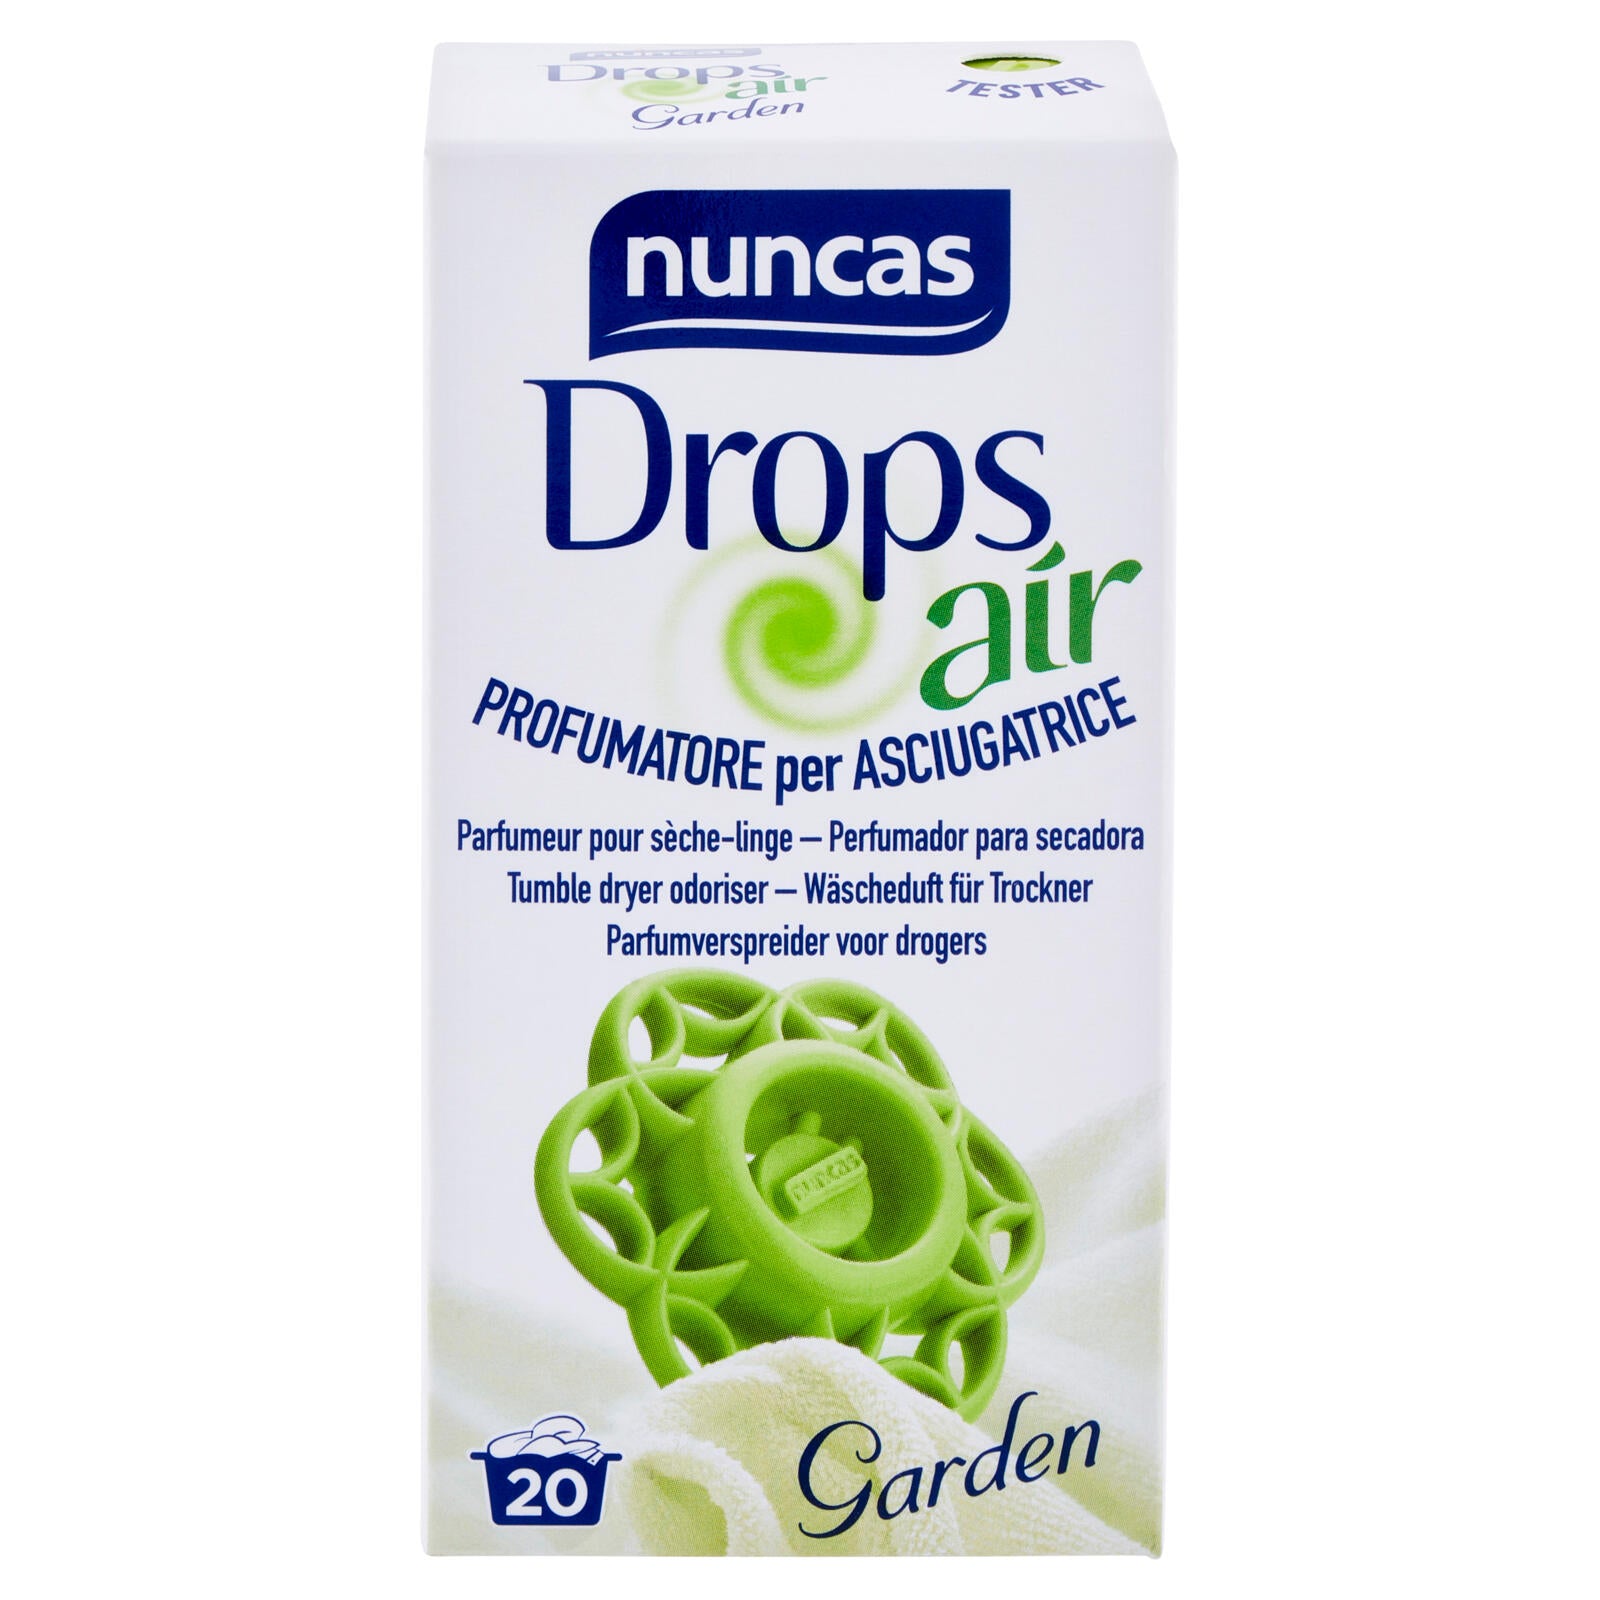 nuncas Drops air Profumatore per Asciugatrice Garden 18 g